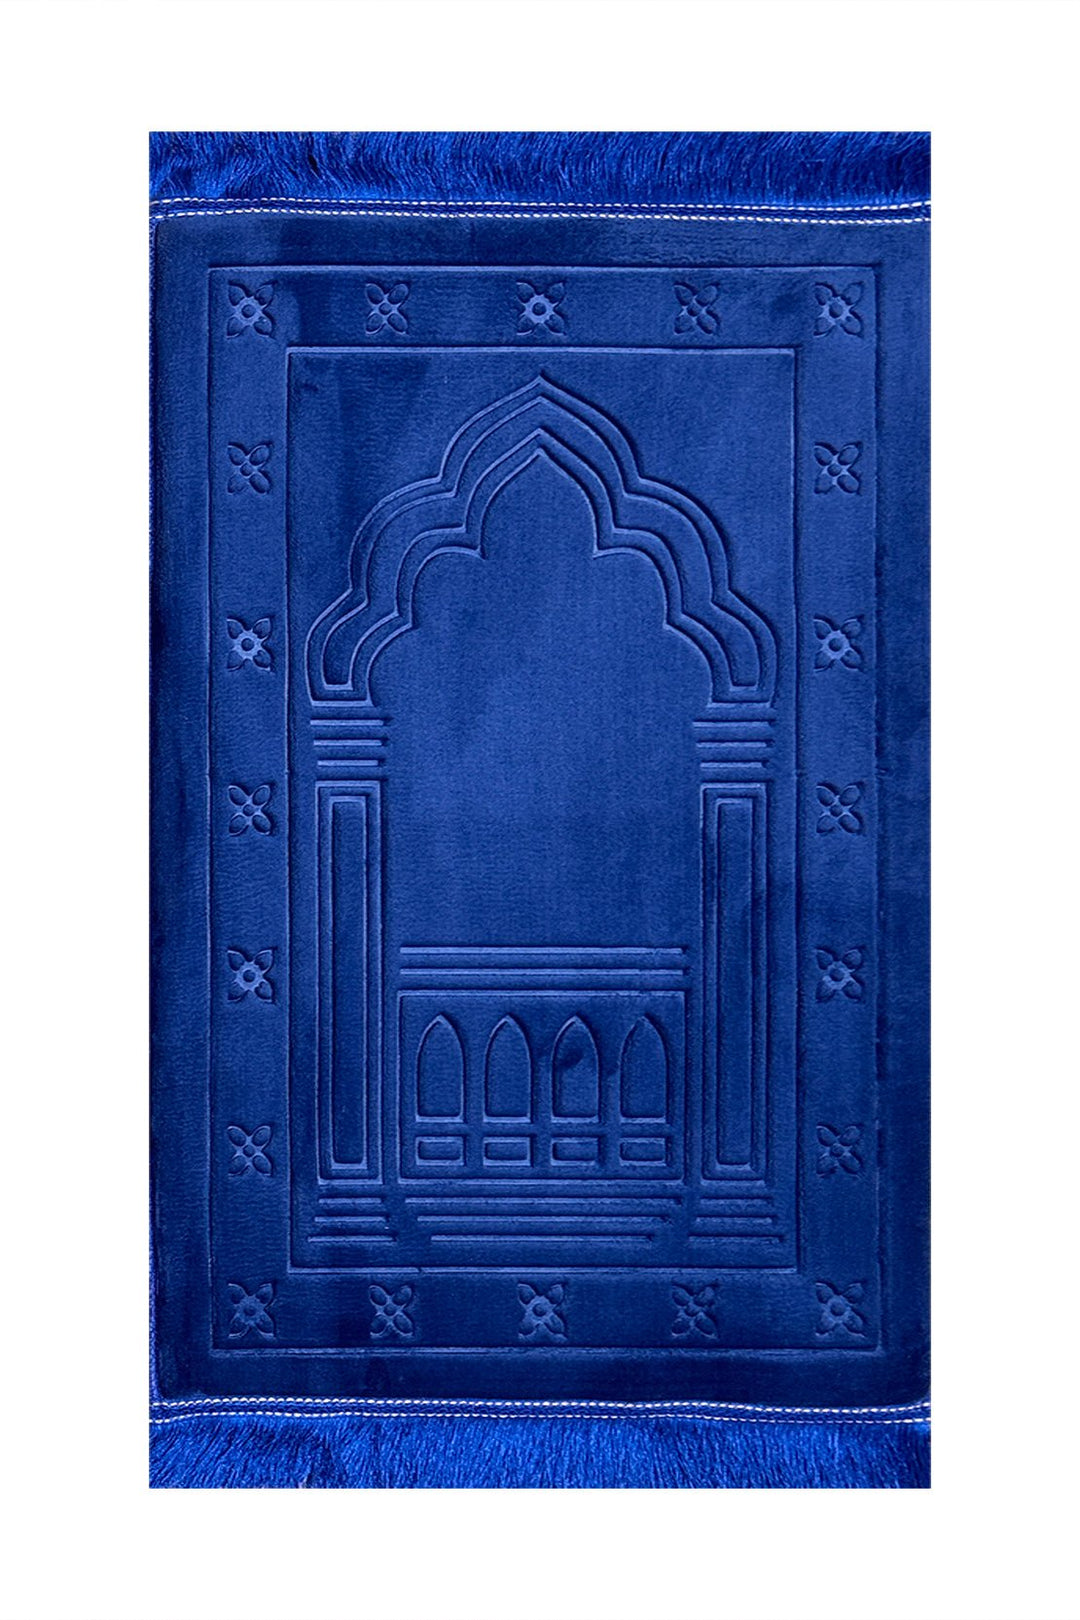 Premium Memory Foam Janamaz blue - Islamic Prayer Mat - Very Thick, Padded, Non-Slip - V Surfaces